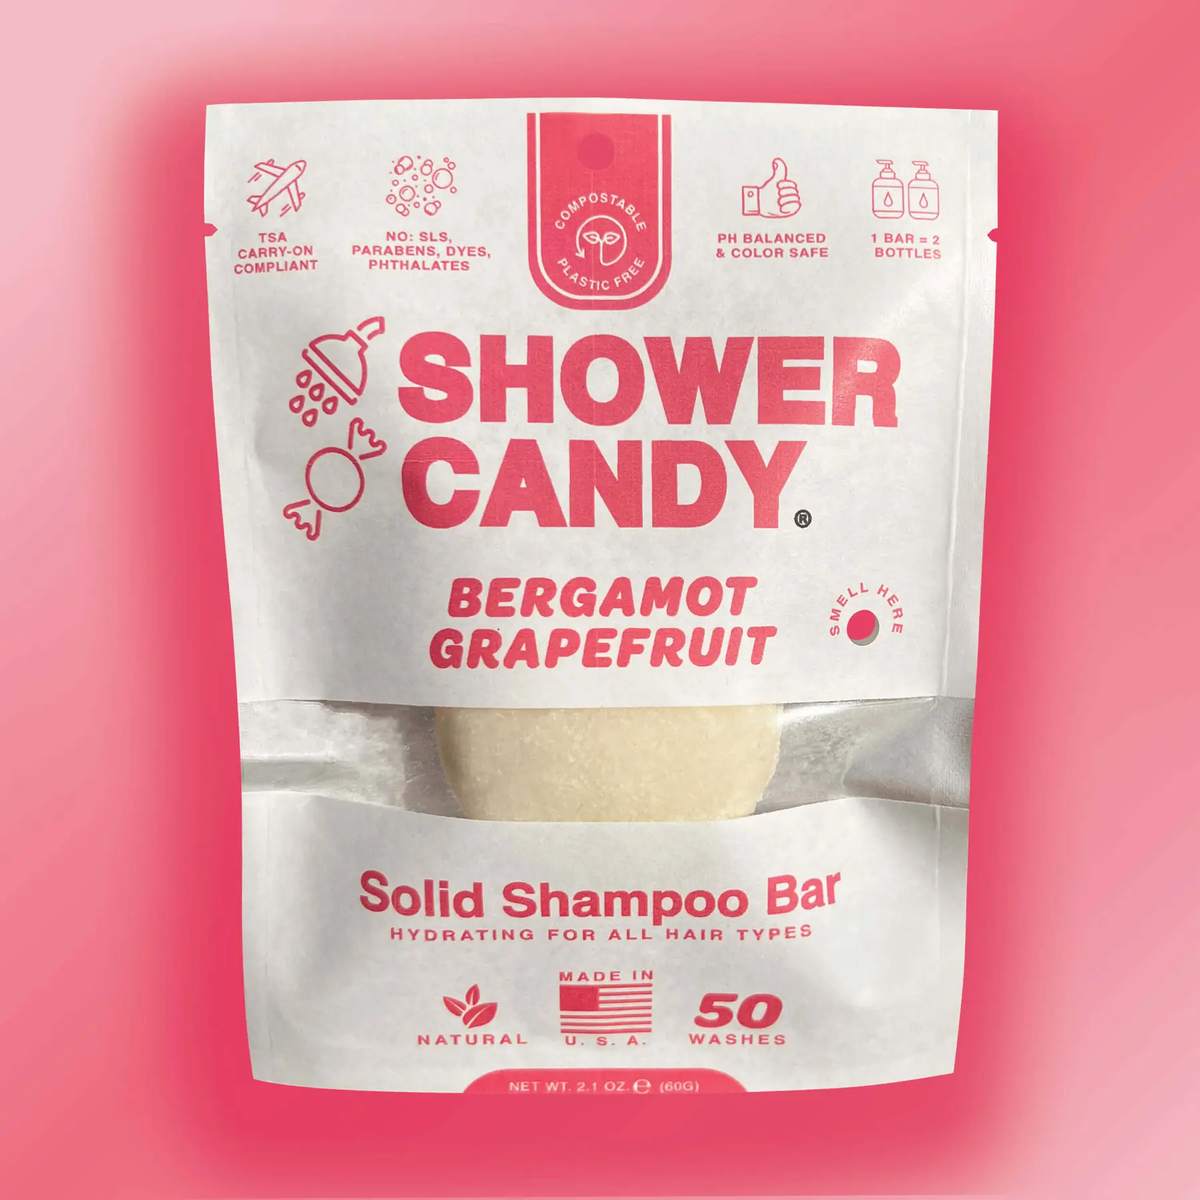 Shower Candy - Bergamot Grapefruit Solid Shampoo Bar